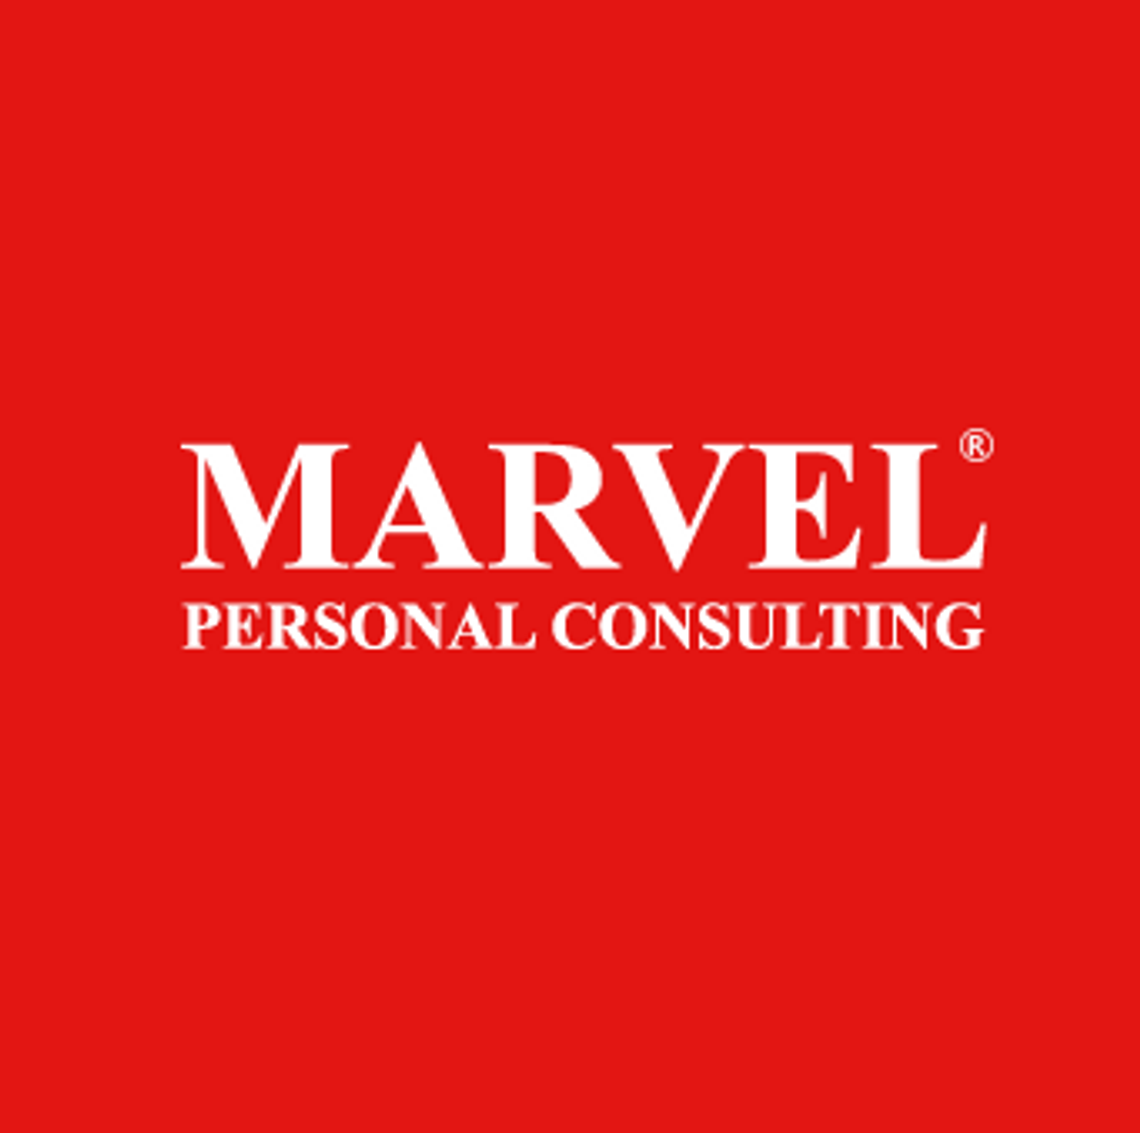 Marvel Personal Consulting - praca w Holandii